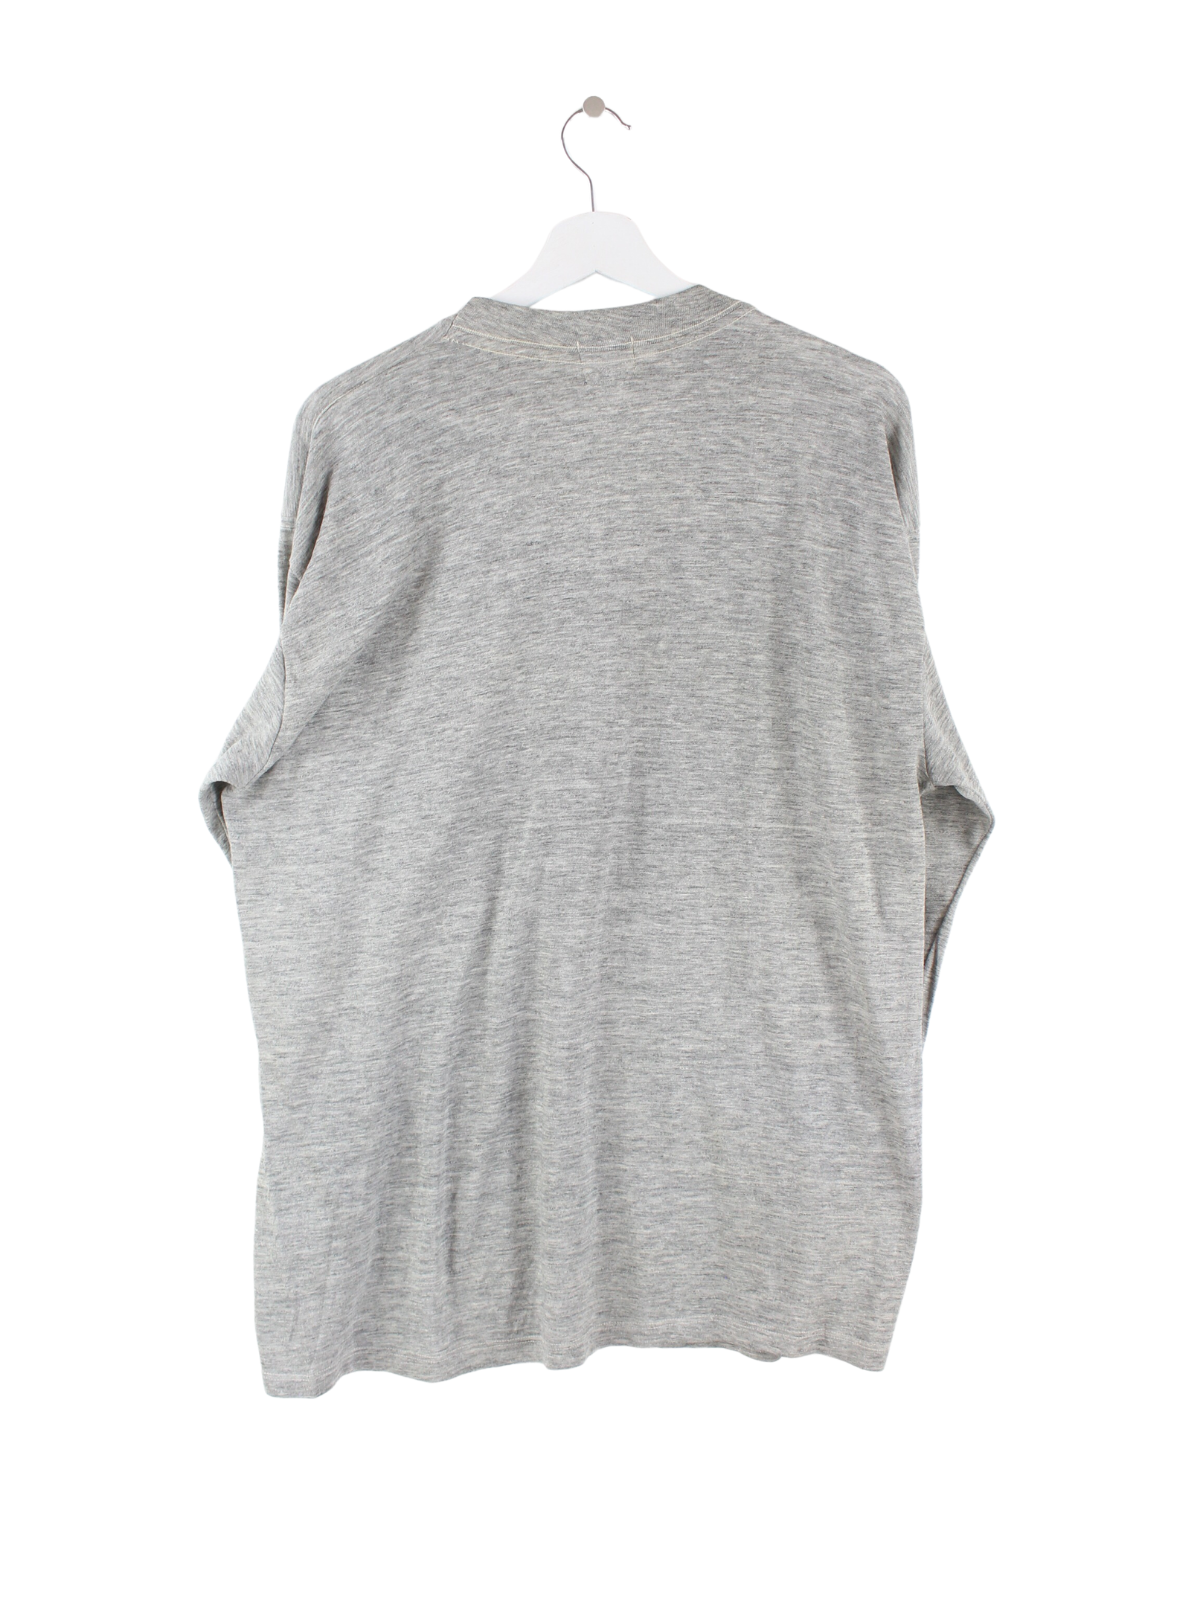 Levi's Sweatshirt Gray L